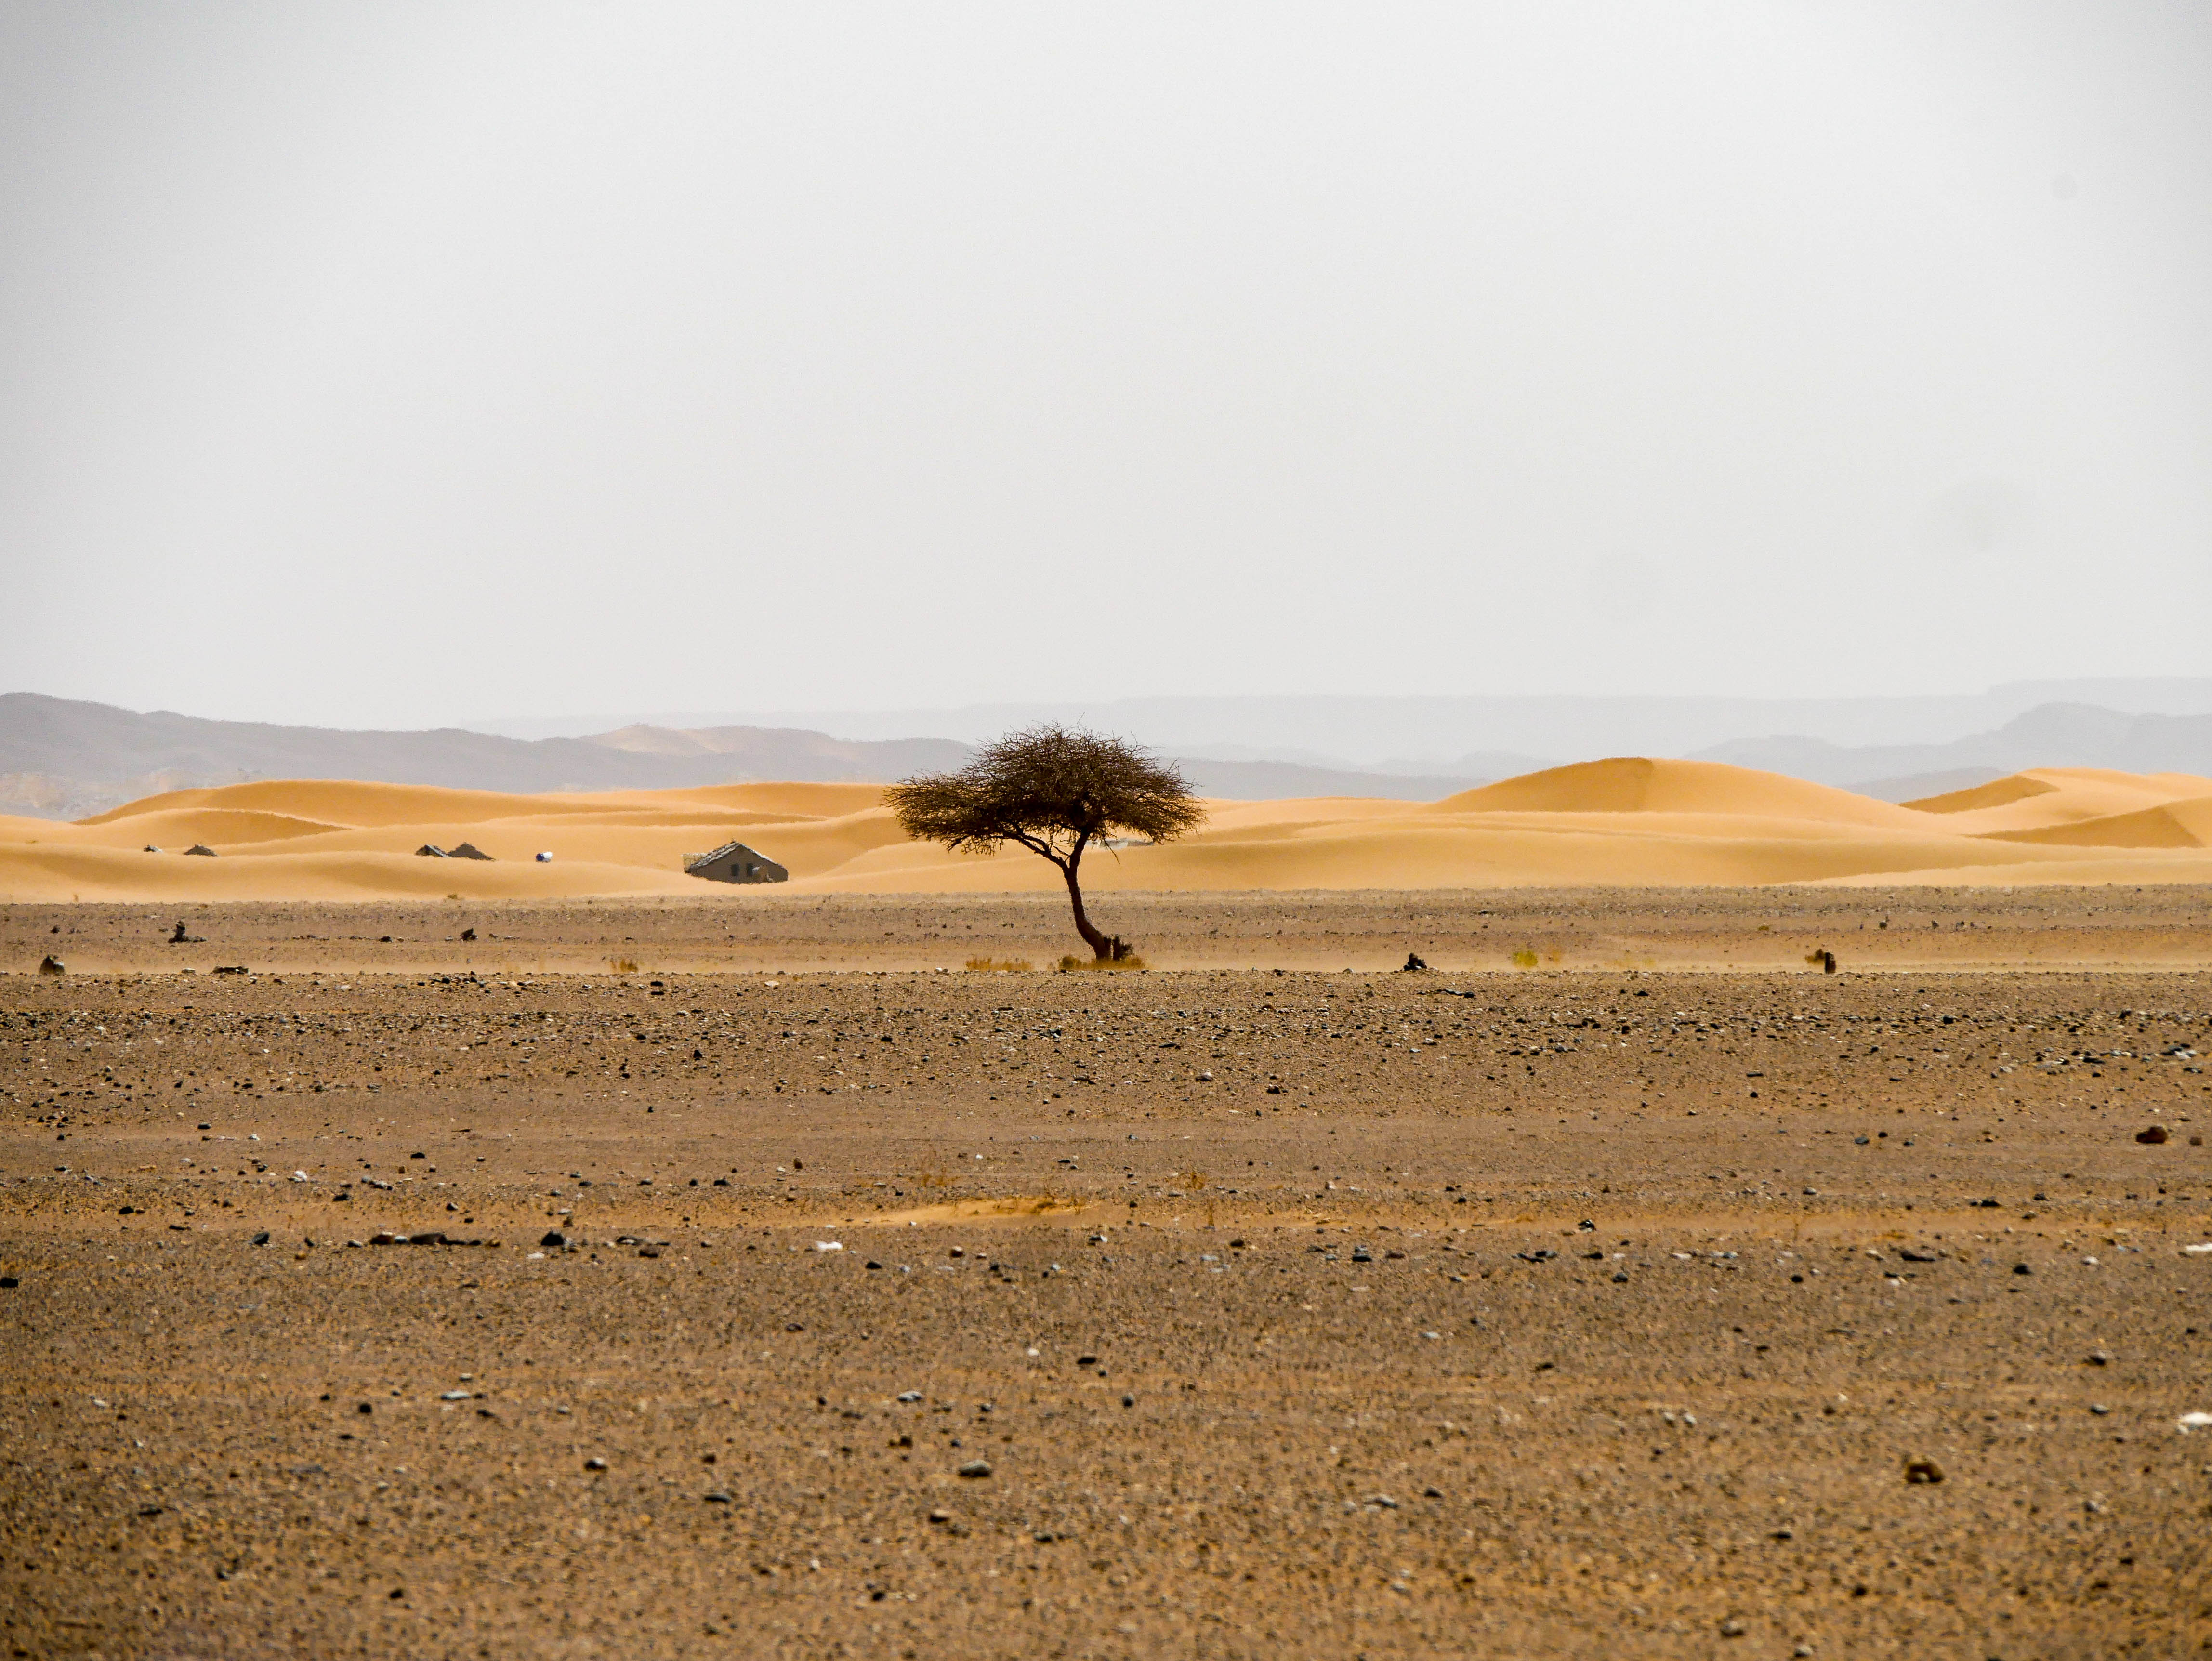 Morocco Sahara Desert with Algeria in the distance